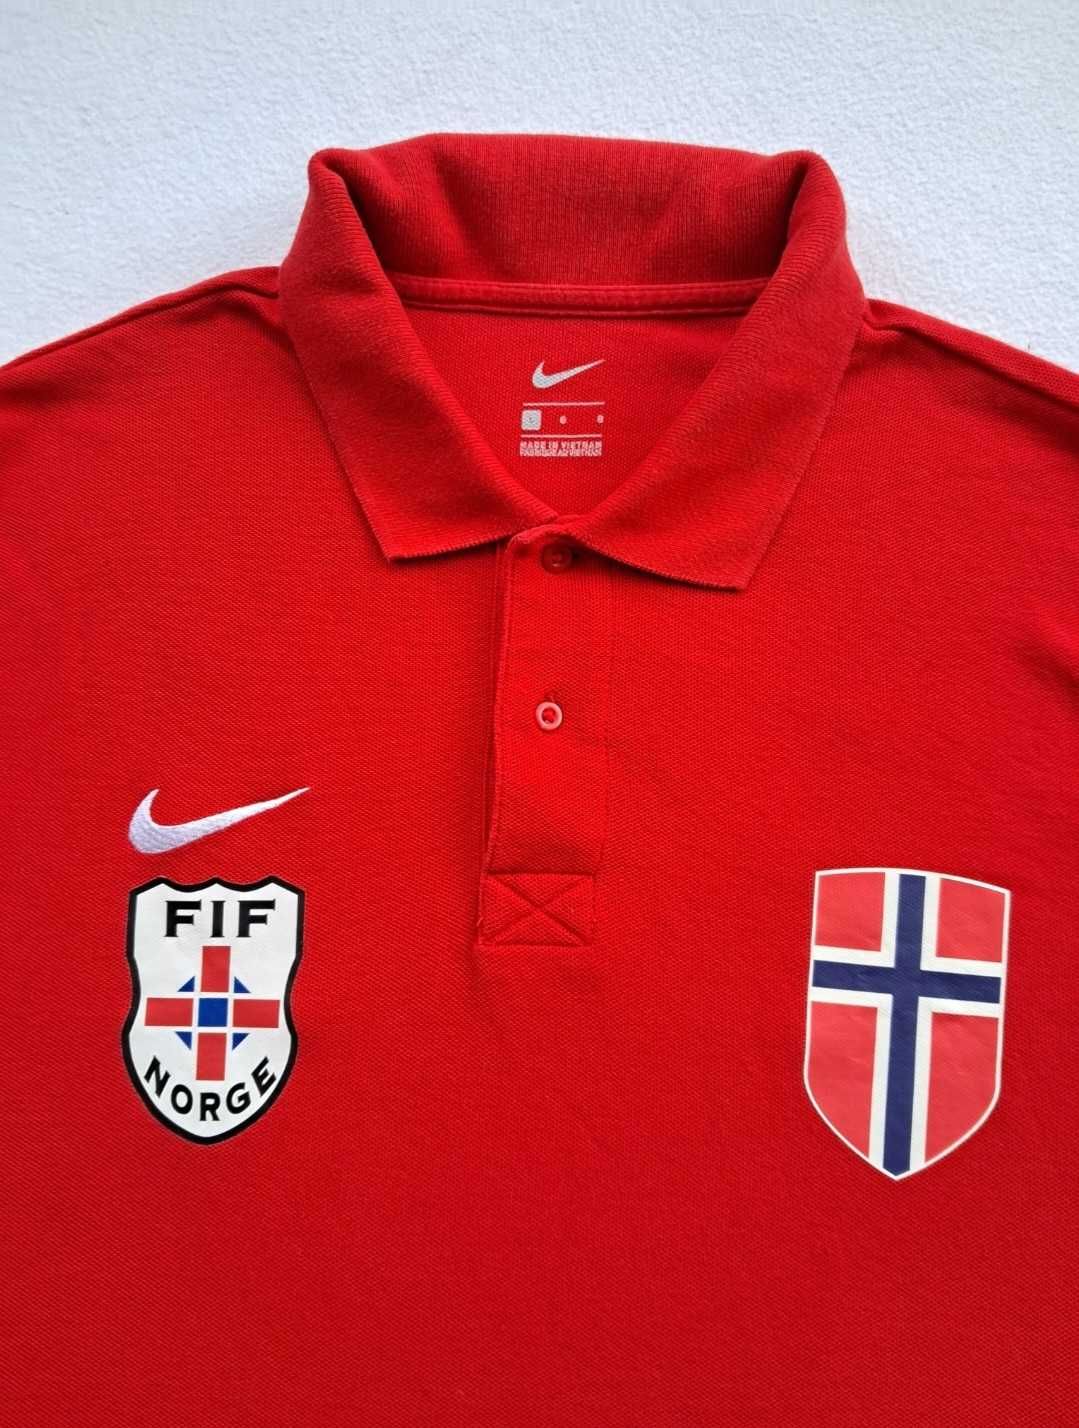 Мужское красное поло Nike Norge с флагом Норвегии в стиле napapijri